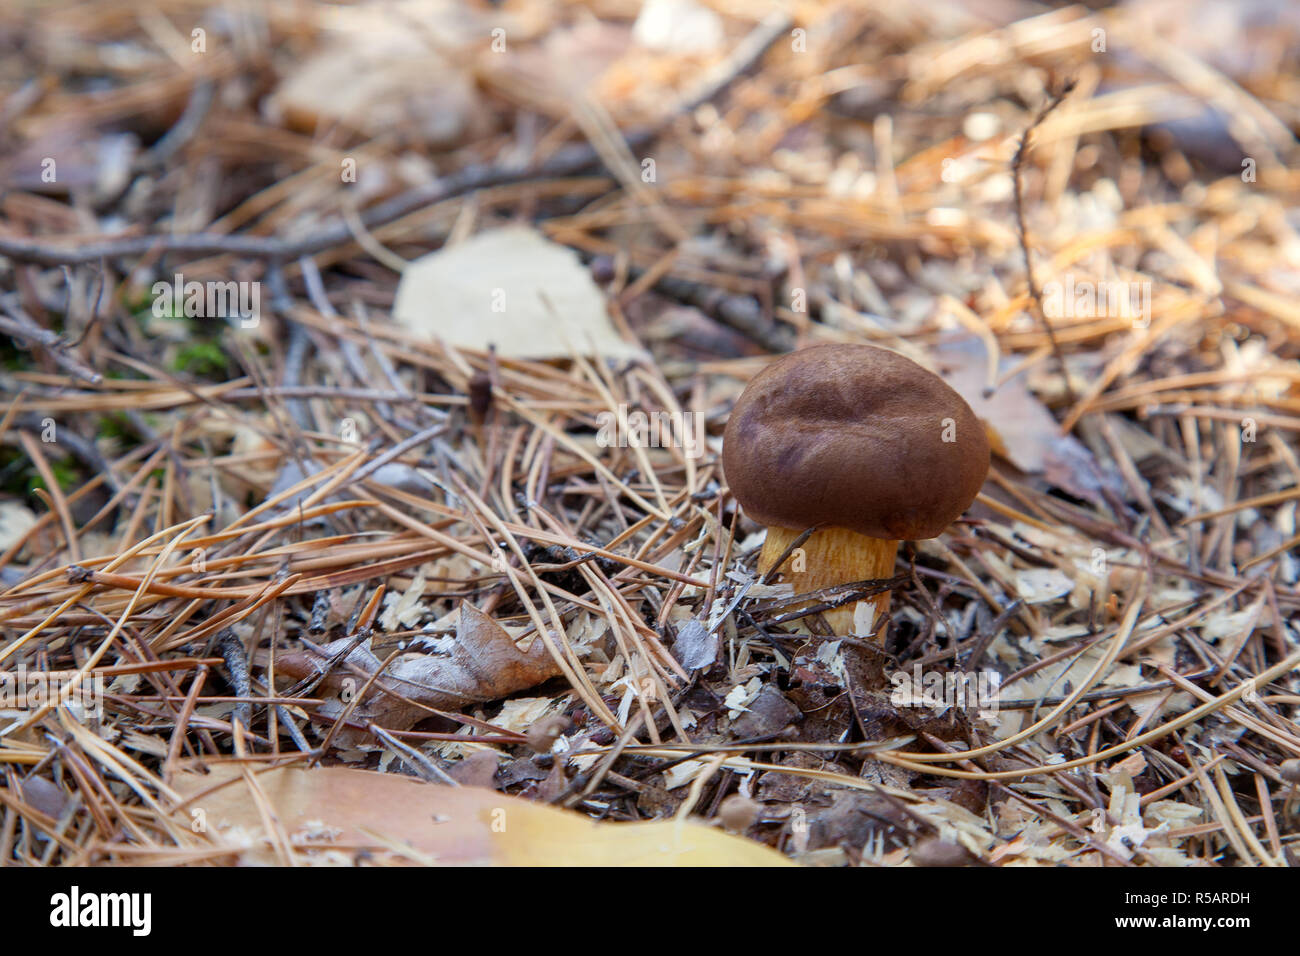 Edible wild mushroom with chestnut color cap in an autumn pine forest. Bay bolete  known as imleria badia or boletus badius mushroom growing in pine t Stock Photo